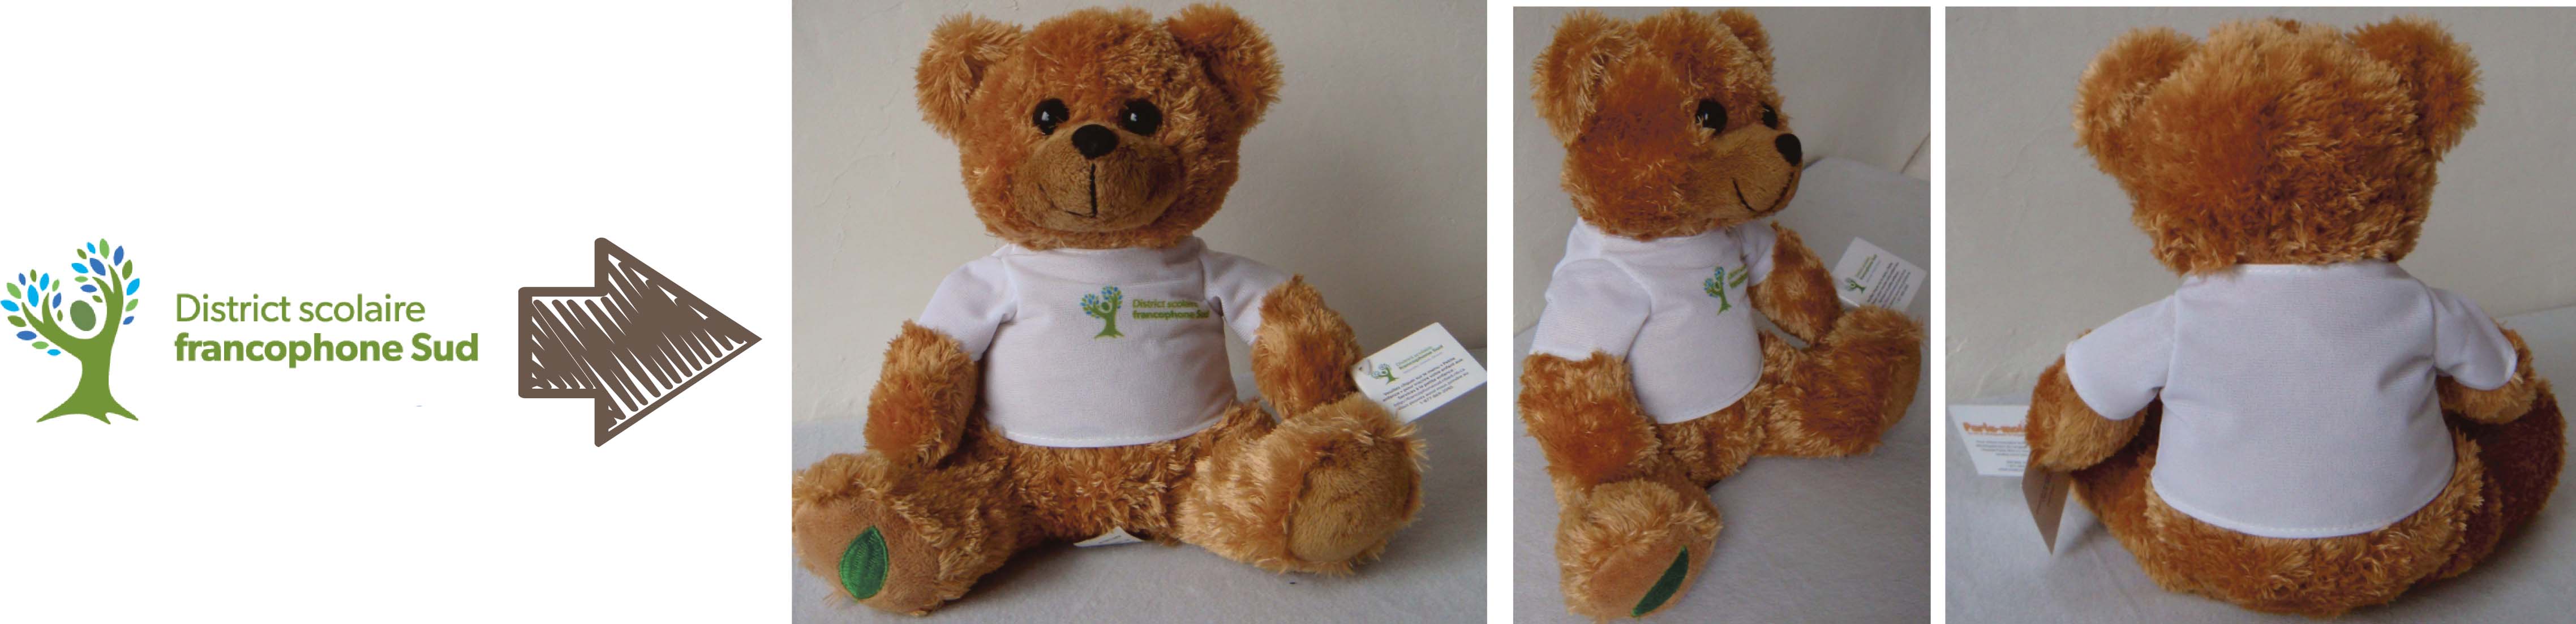 District Scolaire Francophone Sud custom teddy bear